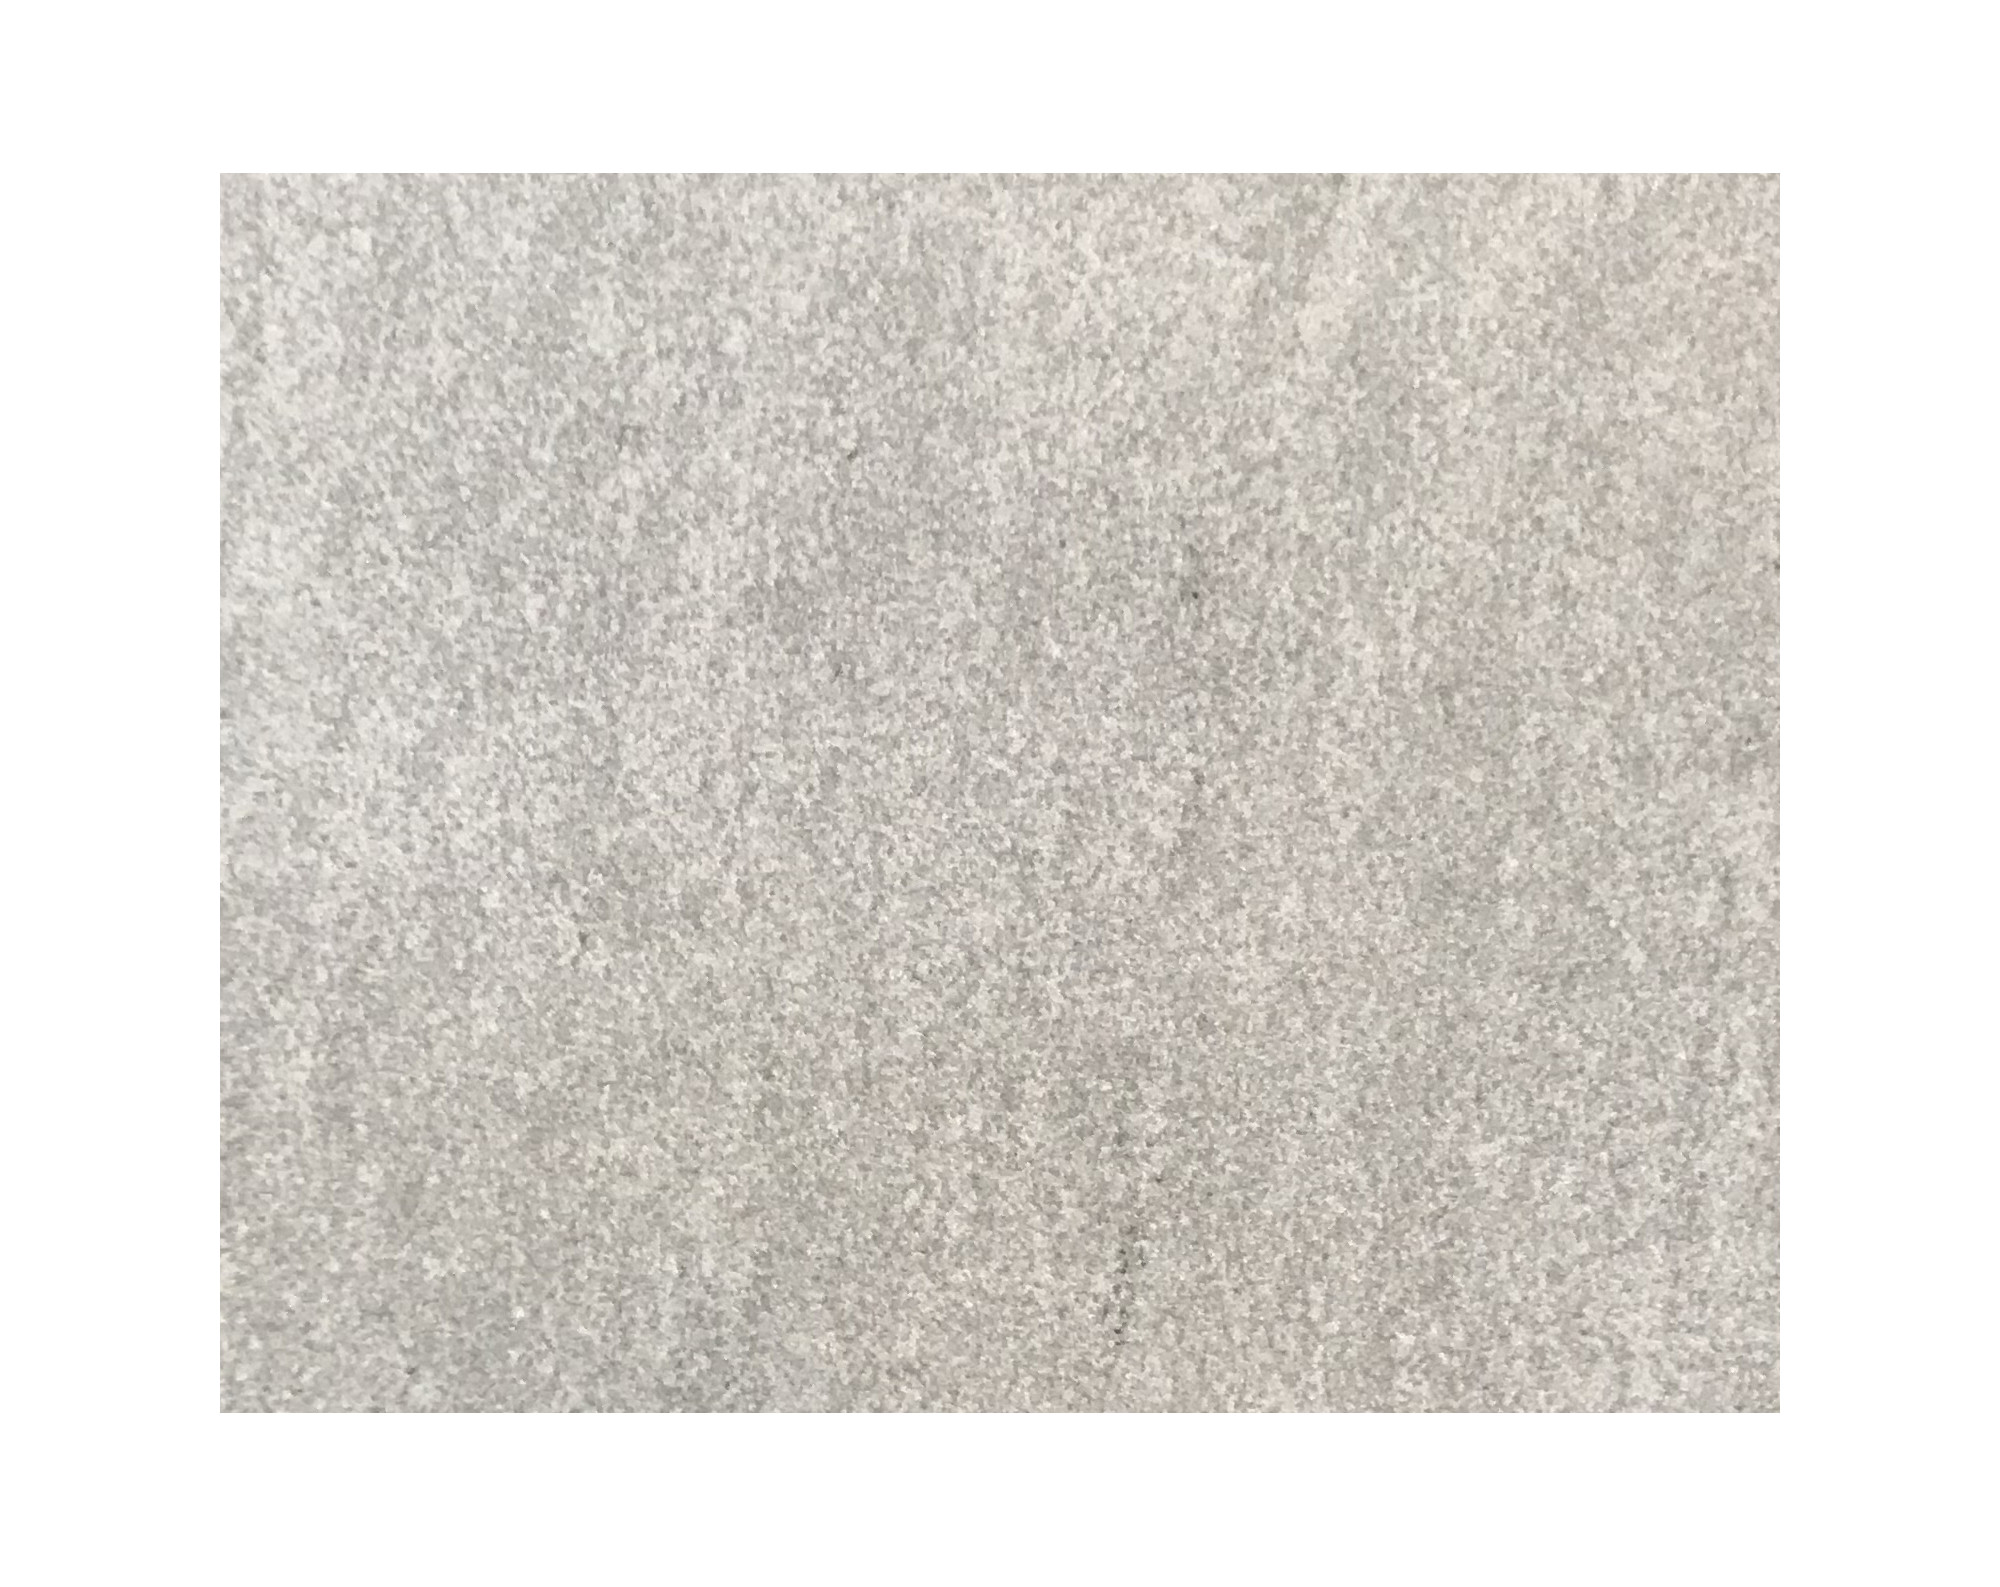 Harmo roc maranelloset, keramiek-serie, 8-vormig d:5,50mx8,55m, zand grijs, keramisch porselein